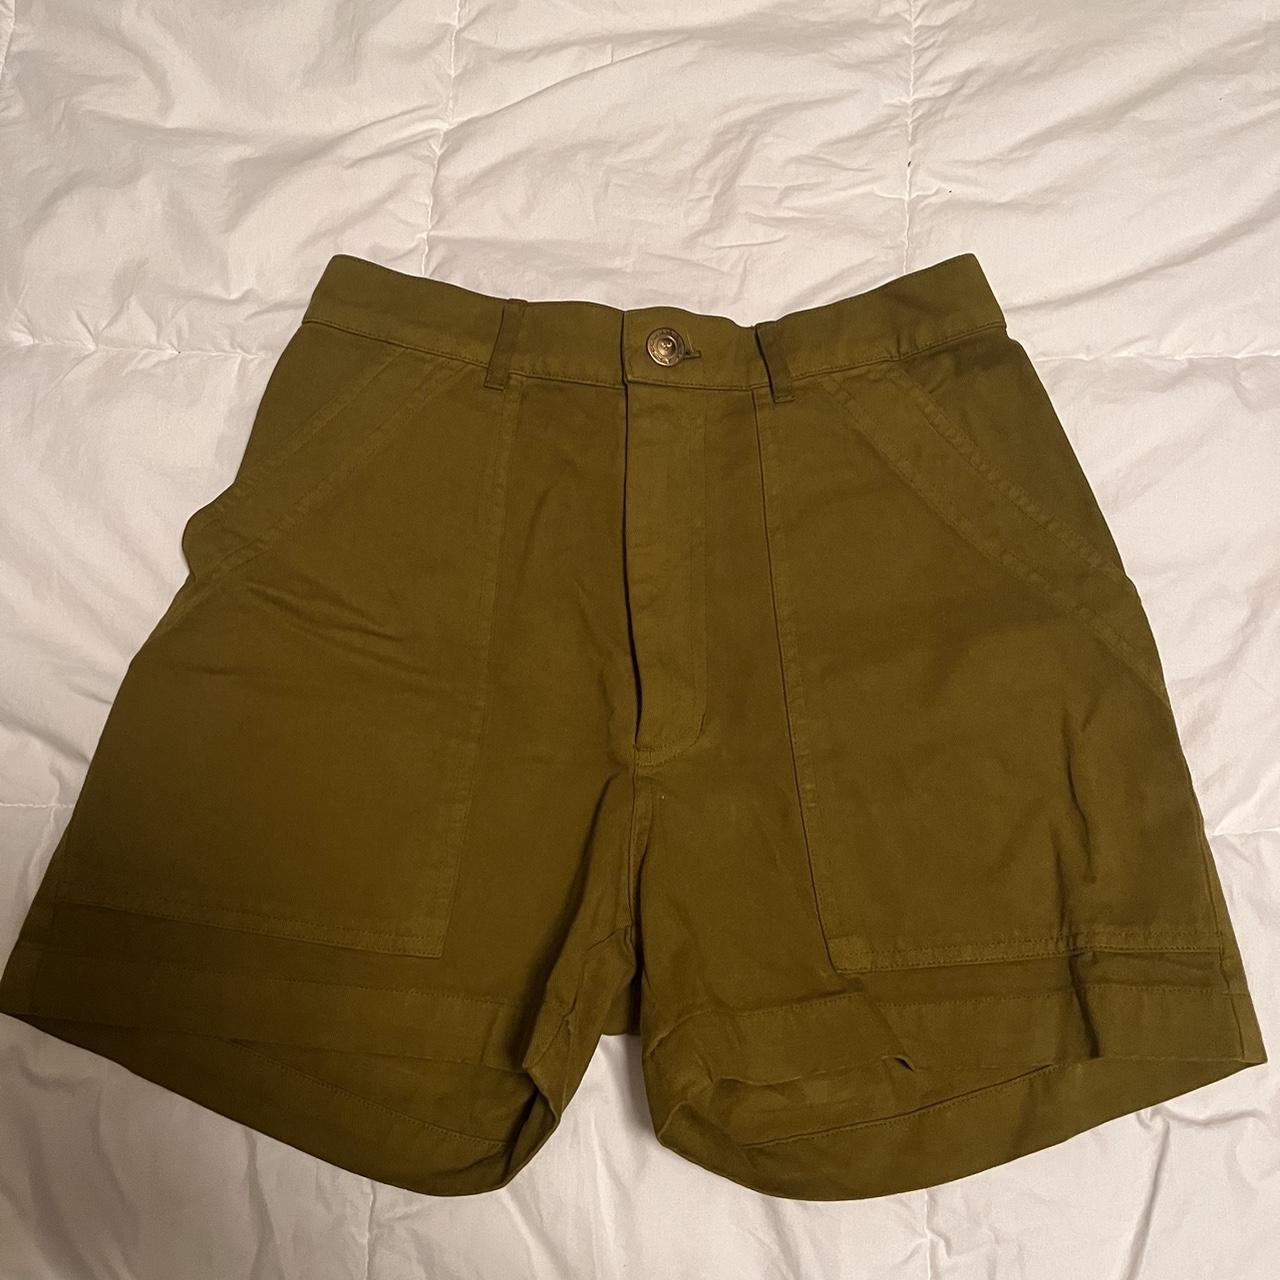 Big bud press work pant shorts - size small - olive... - Depop